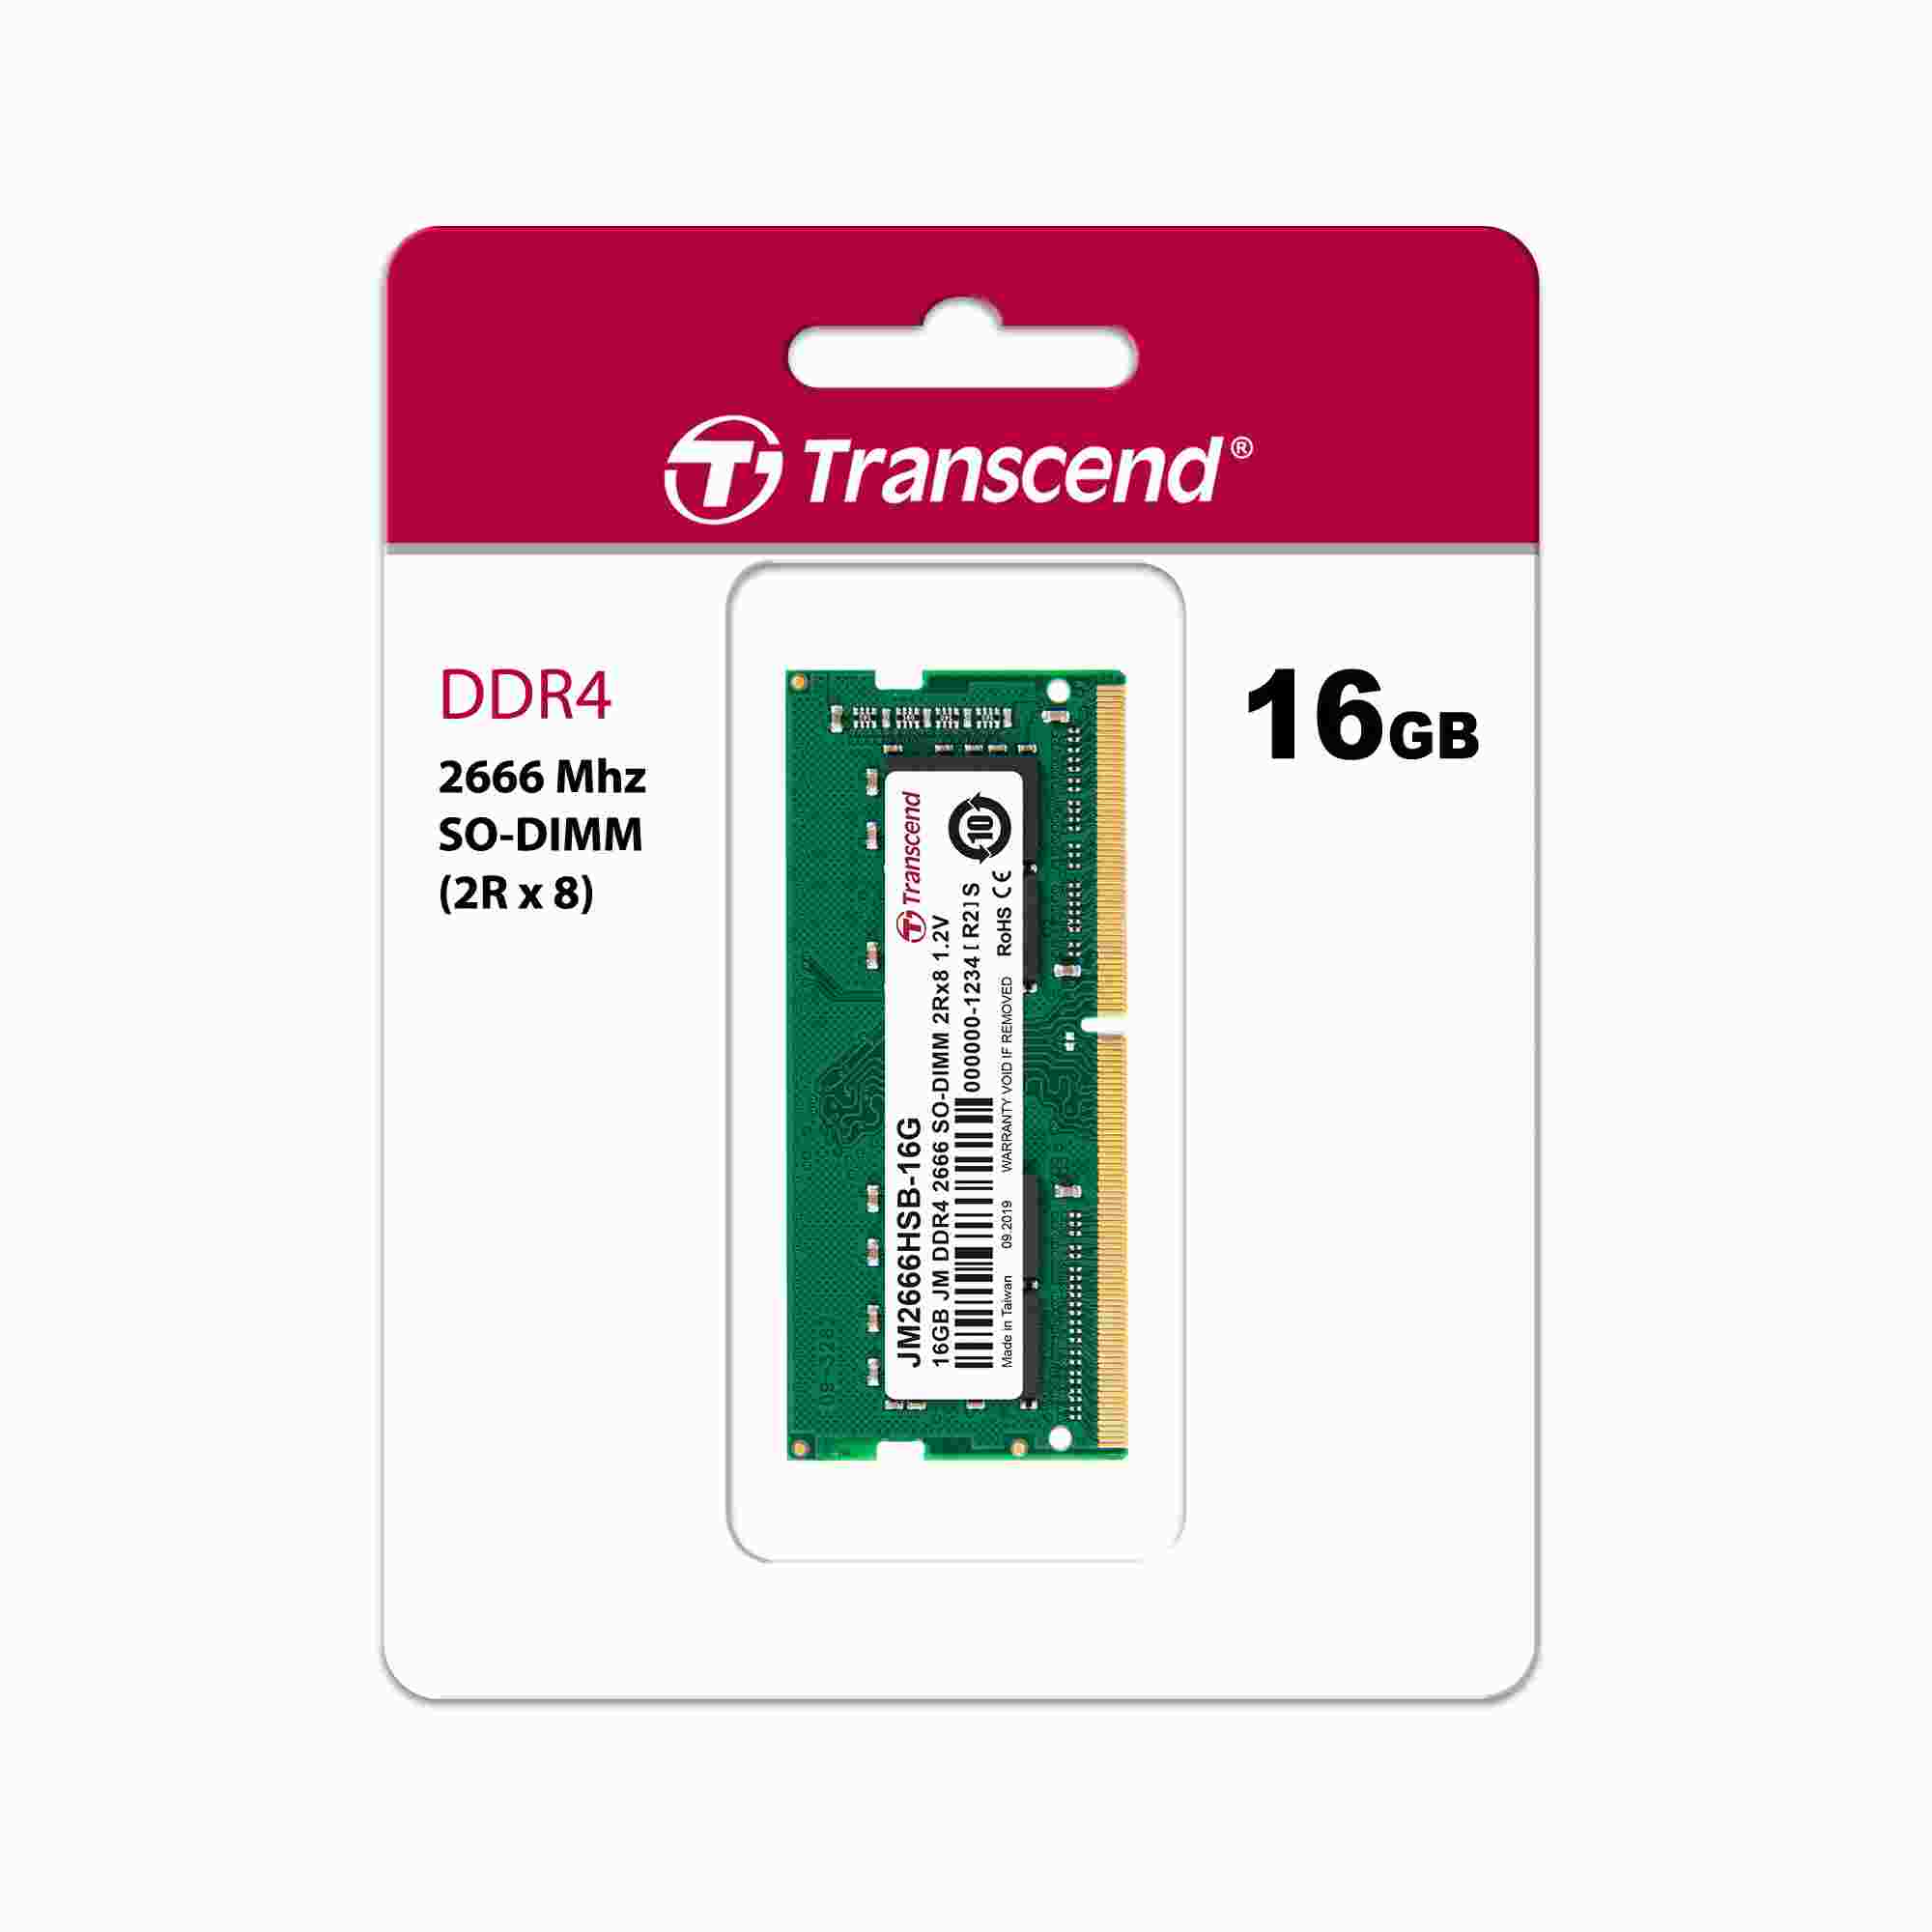 SODIMM DDR4 16GB 2666MHz TRANSCEND 2Rx8 1Gx8 CL19 1.2V1 